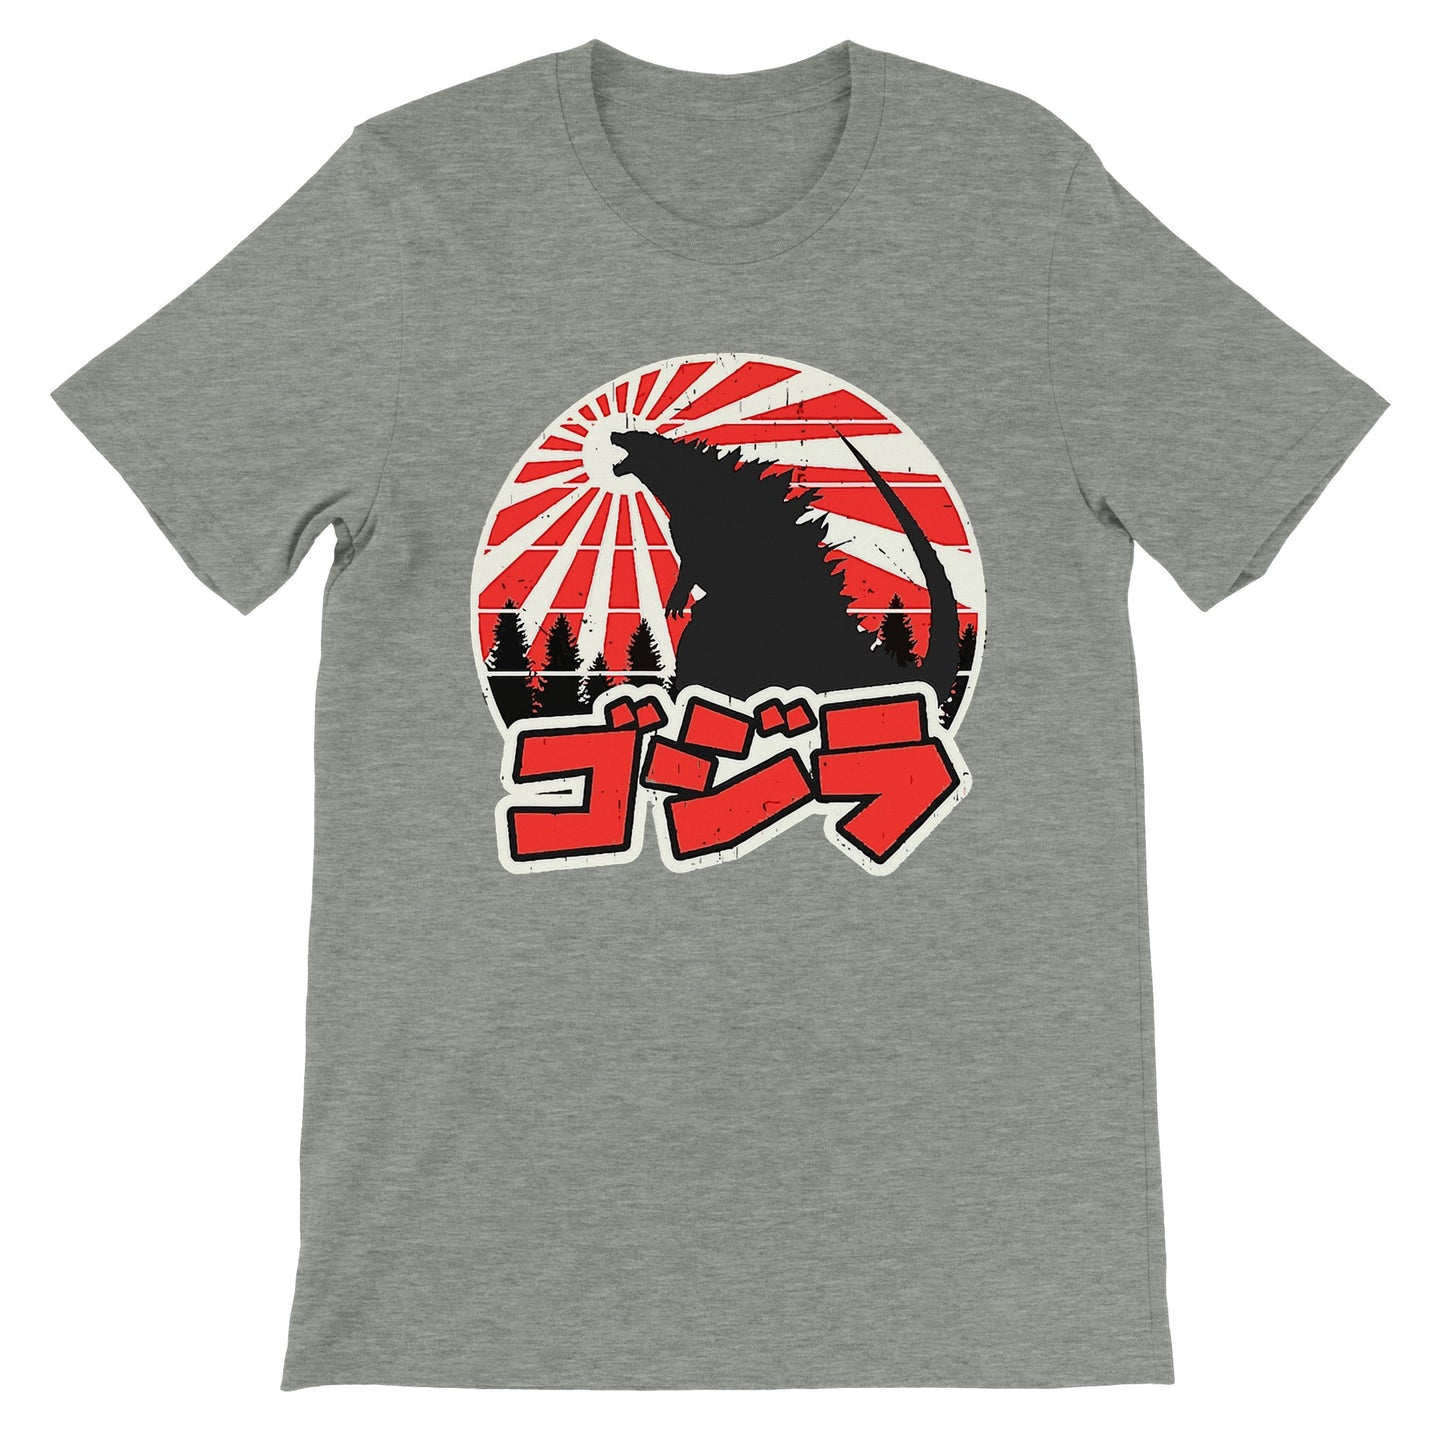 Film T-shirt - Gojira - Godzilla Japan Artwork - Premium Unisex T-shirt